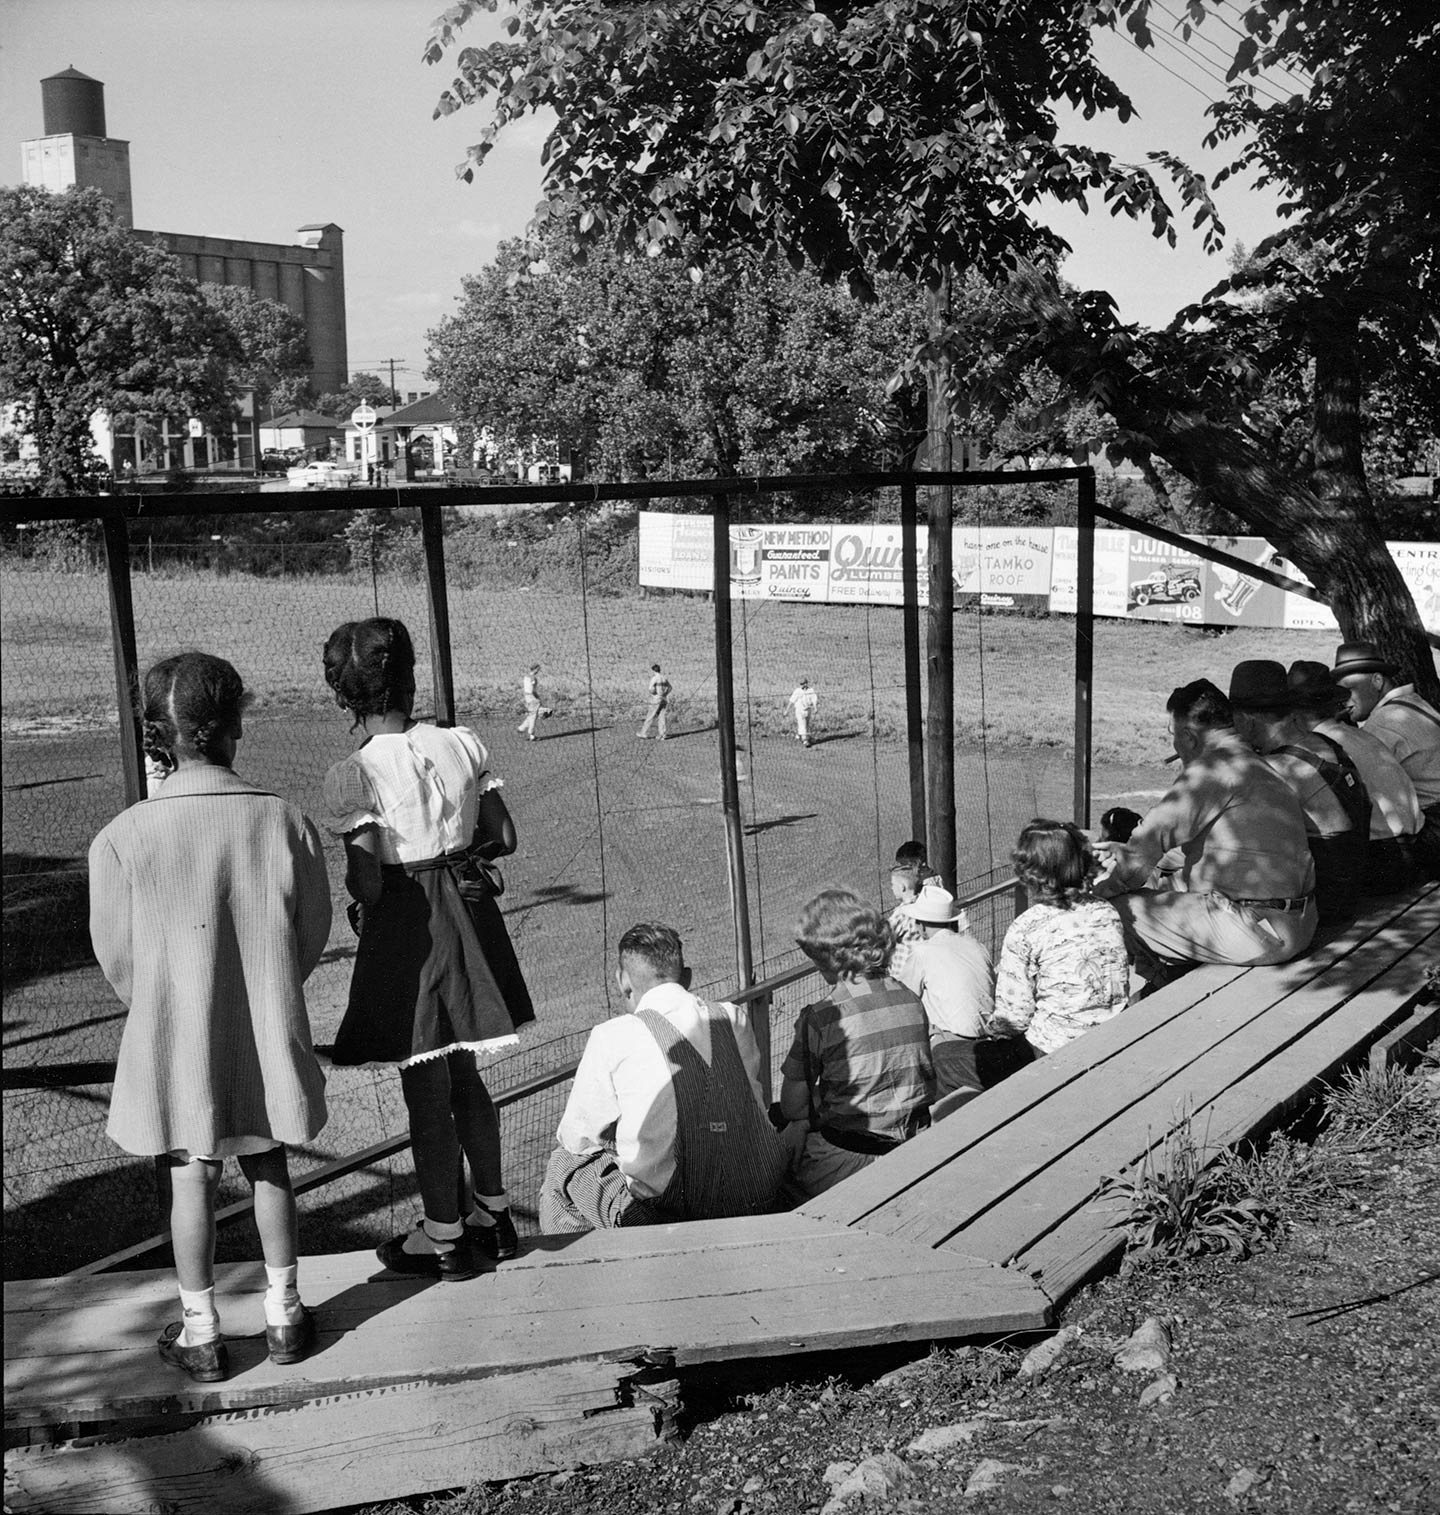 Untitled, Fort Scott, Kansas, 1950, people watching a baseball game